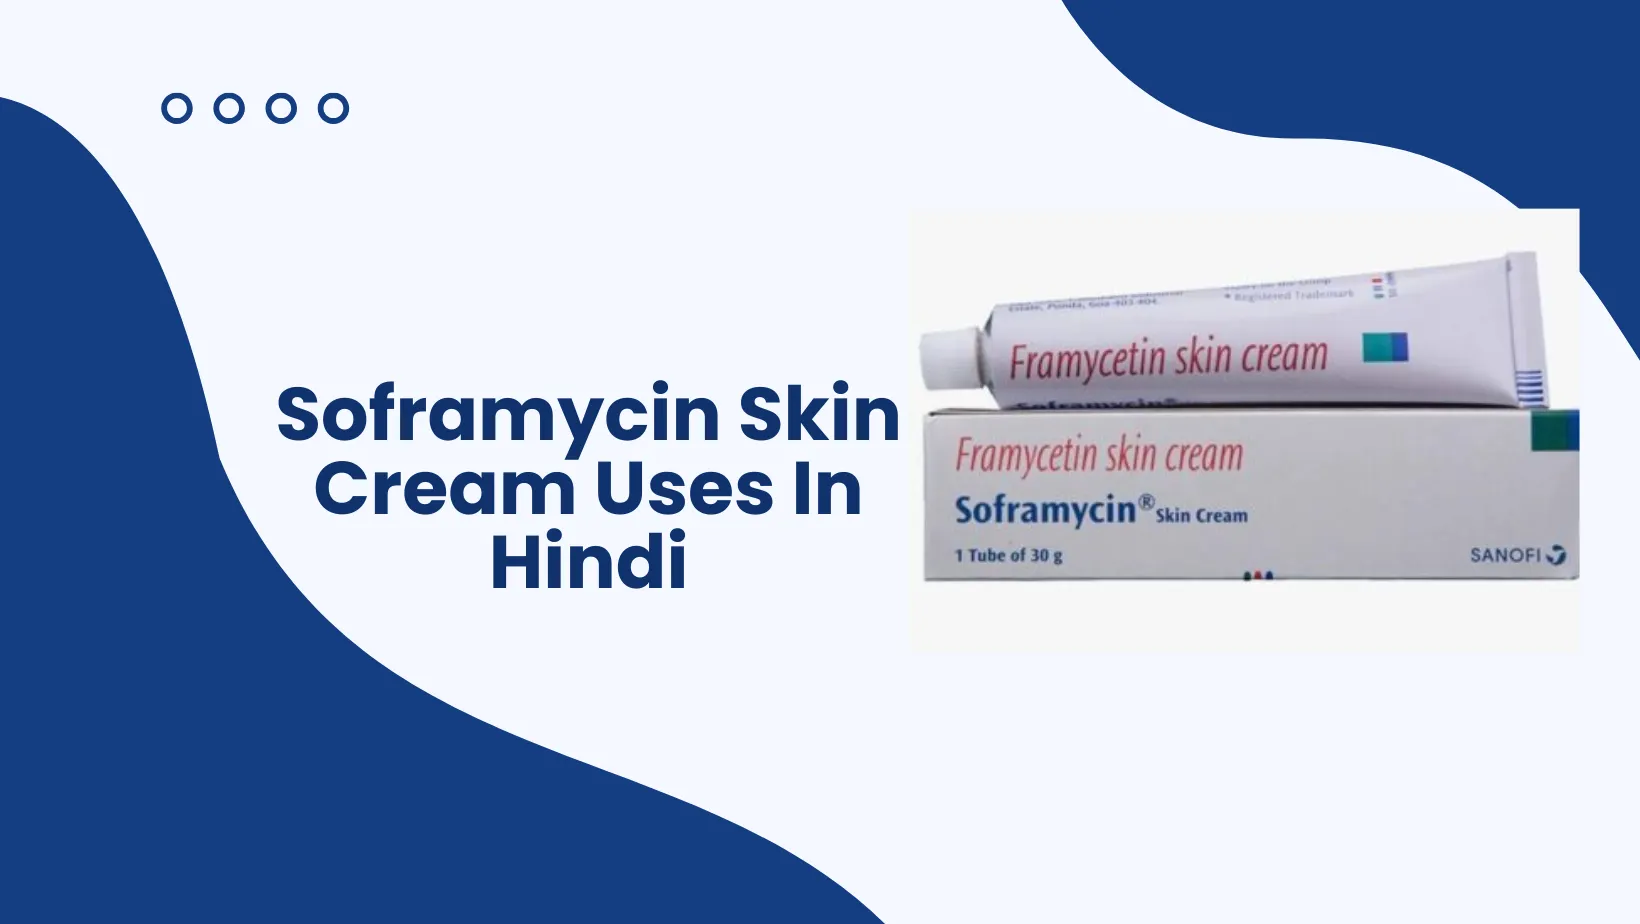 Soframycin Skin Cream Uses In Hindi